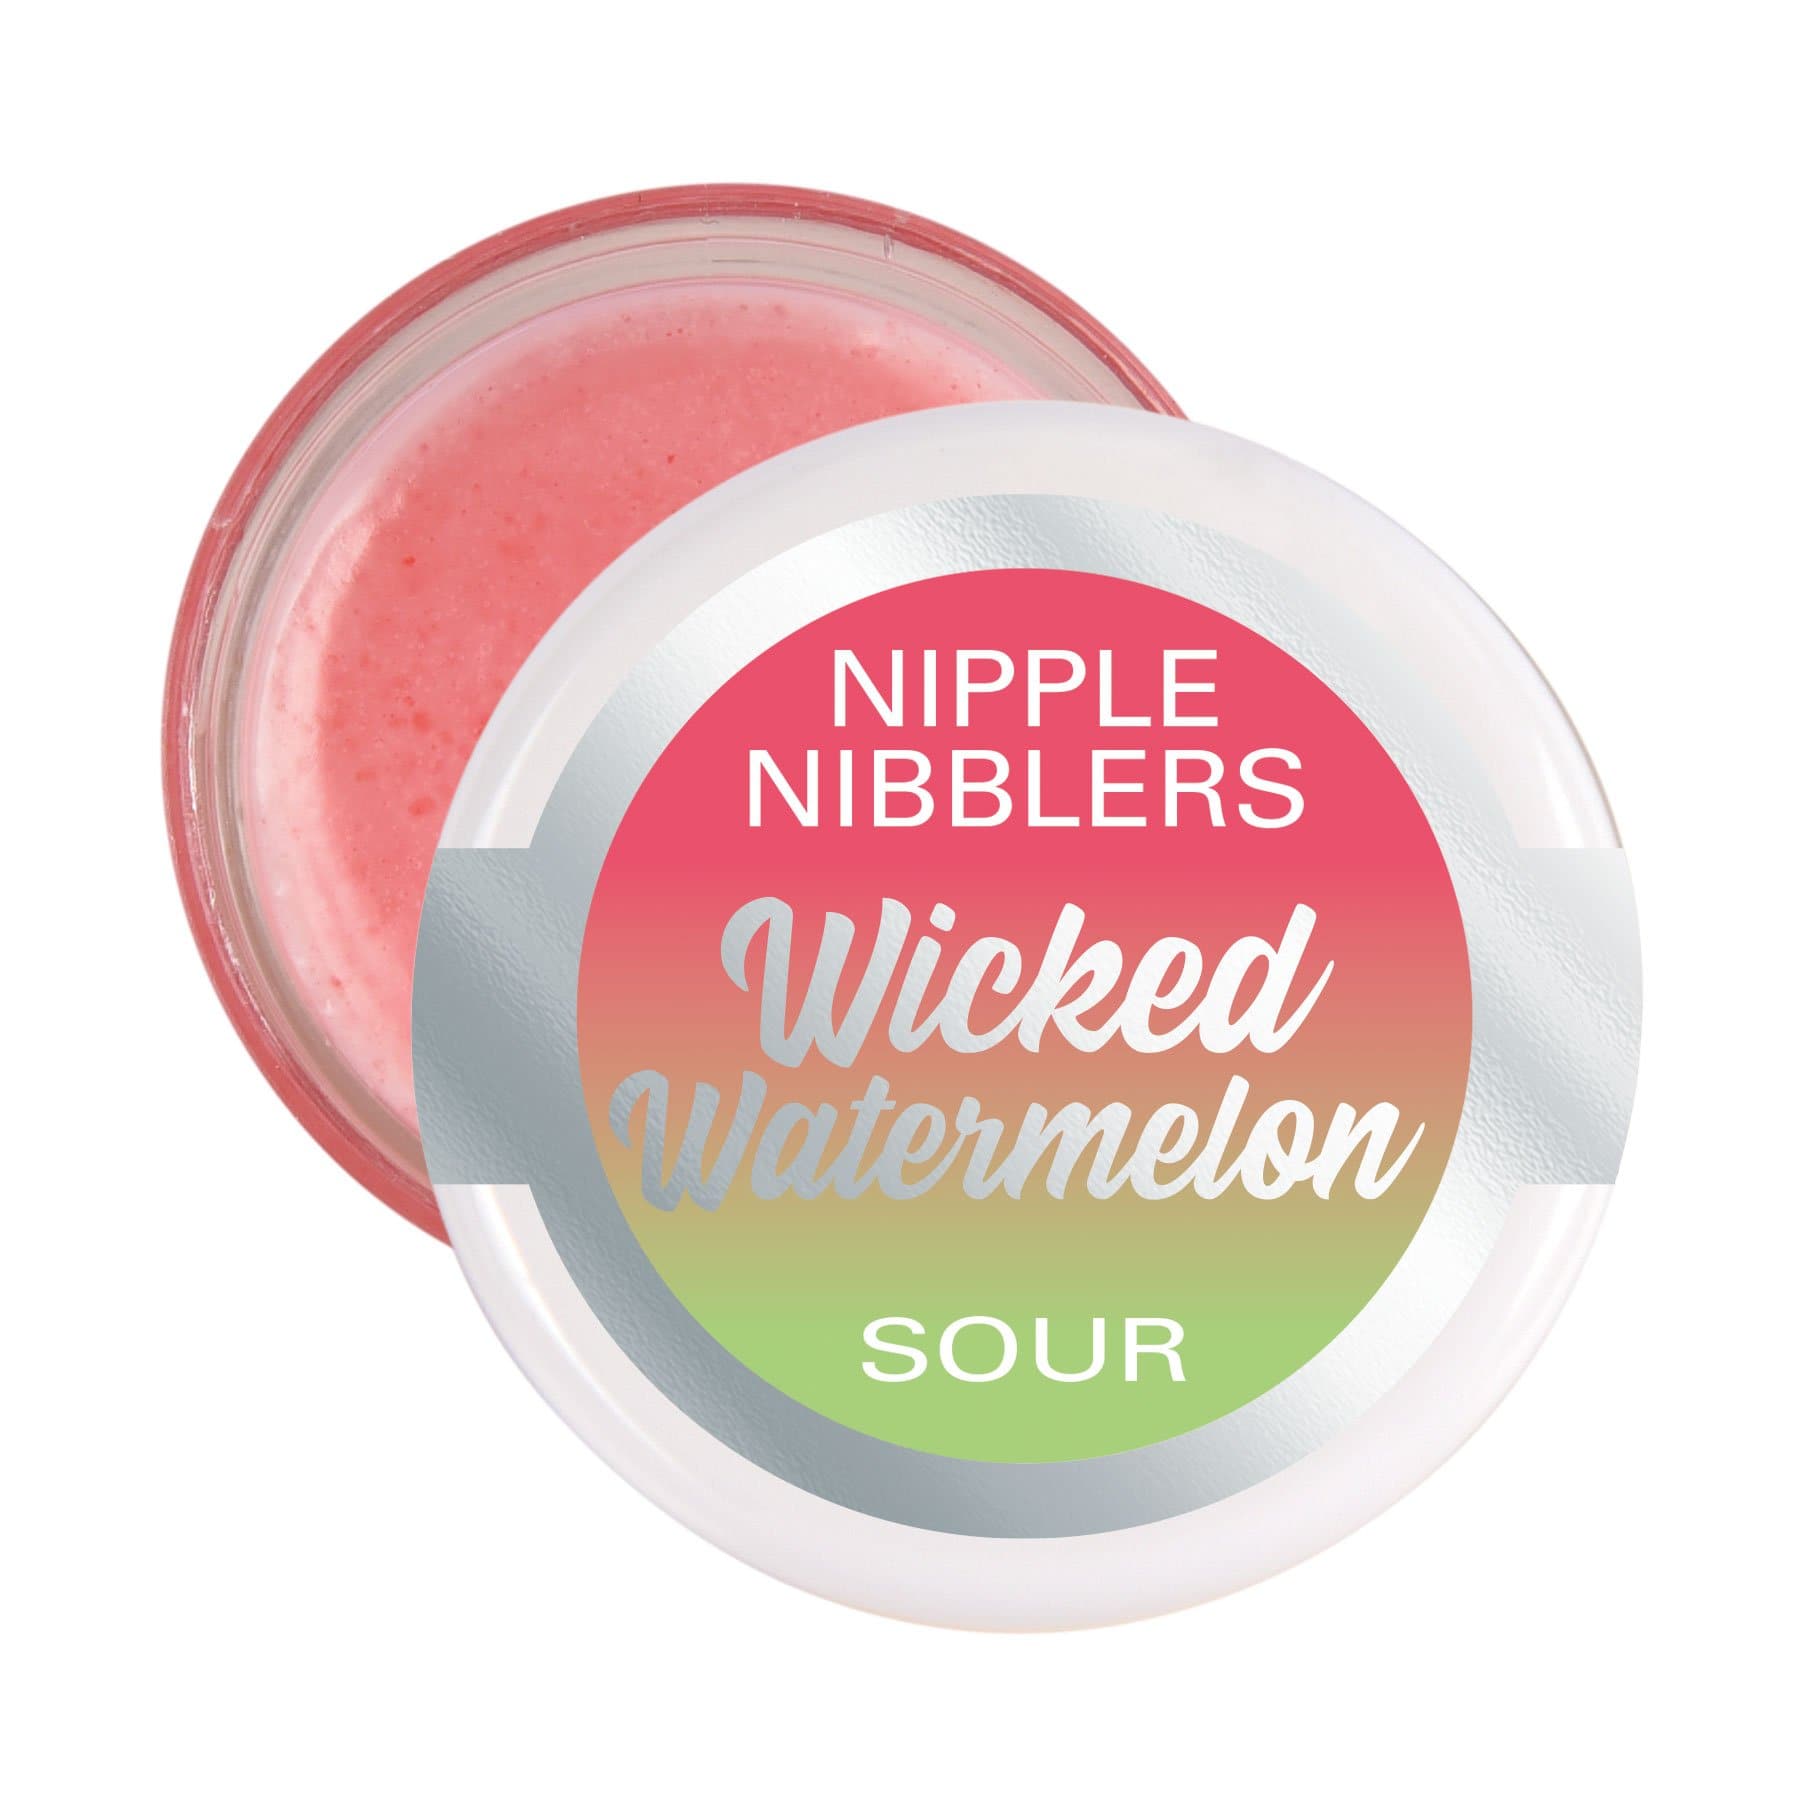 nipple nibbler sour pleasure balm wicked watermelon 3g jar